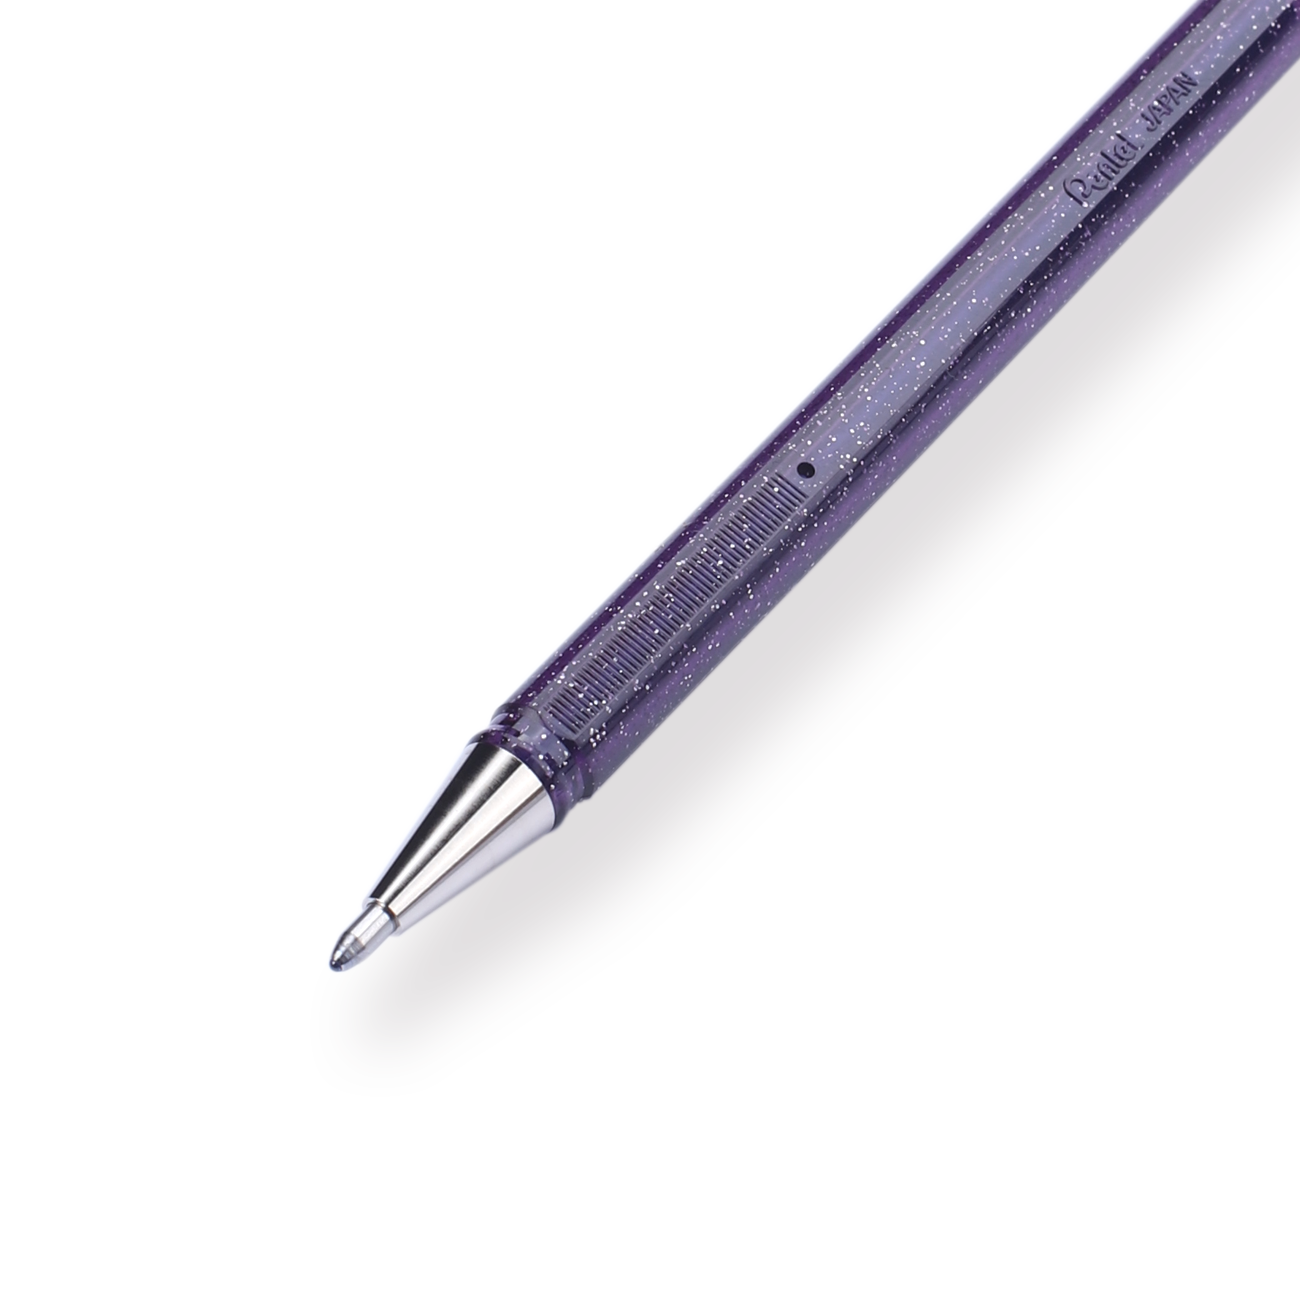 Pentel Hybrid Dual Metallic Gelstift 1,0 mm – Violett + Metallic-Blau